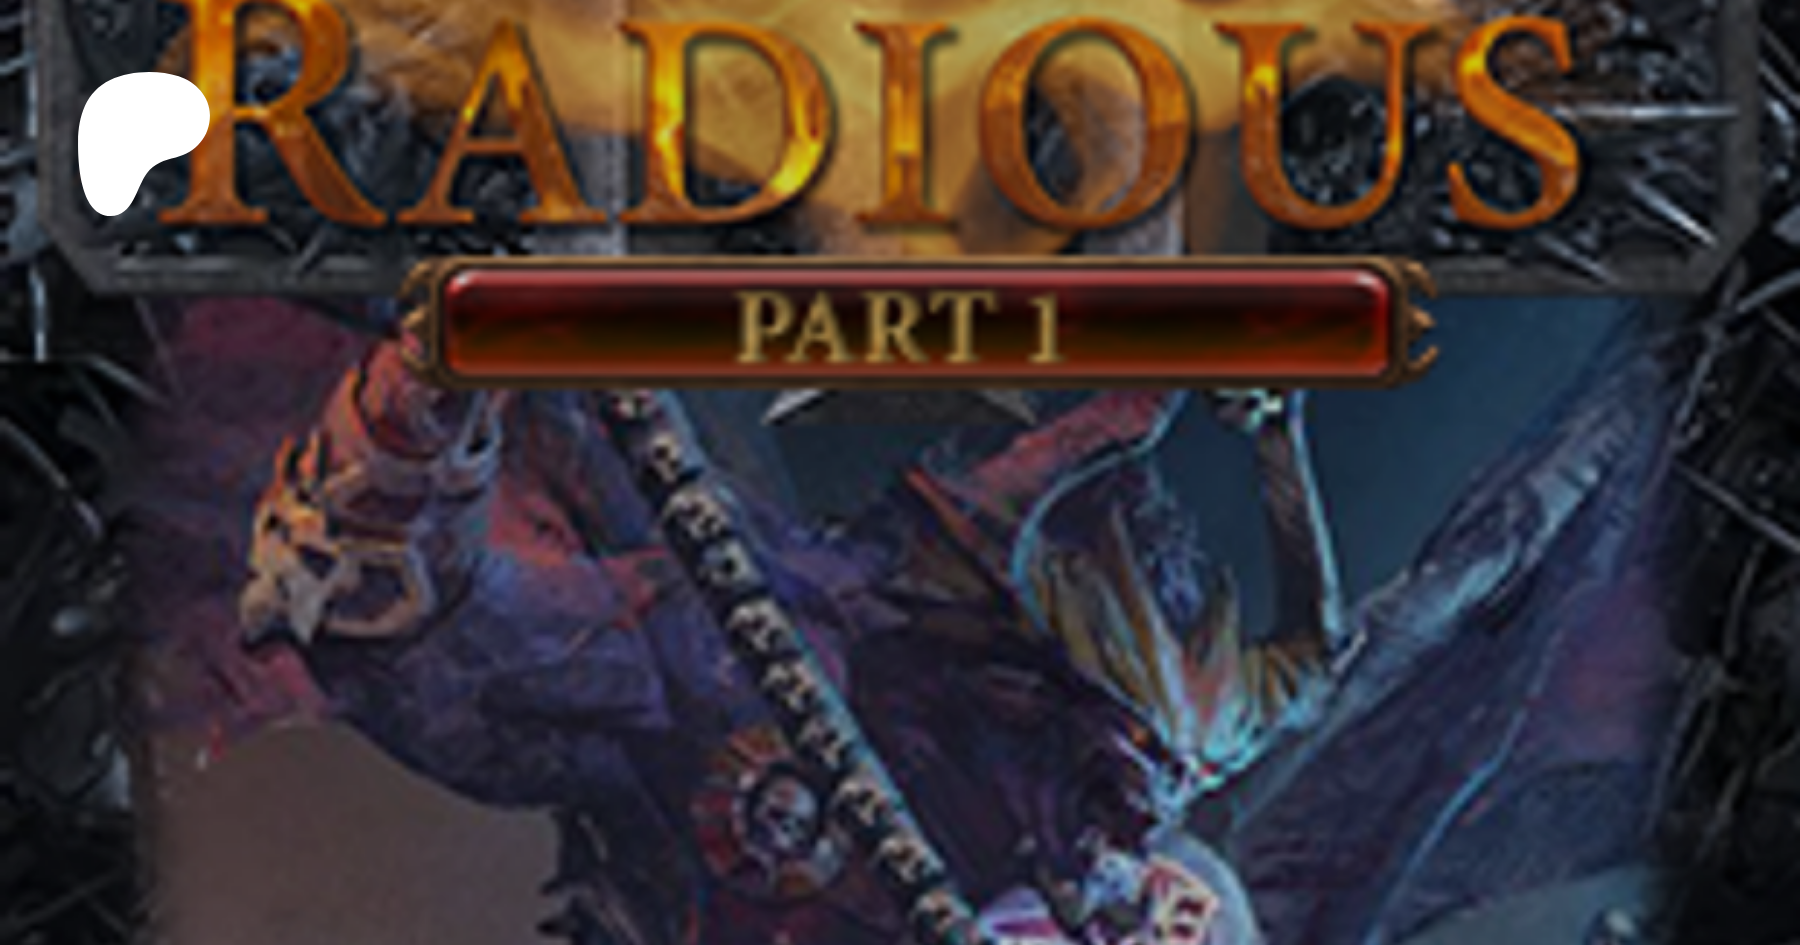 Steam Workshop::Radious Total War Mod - Part 1